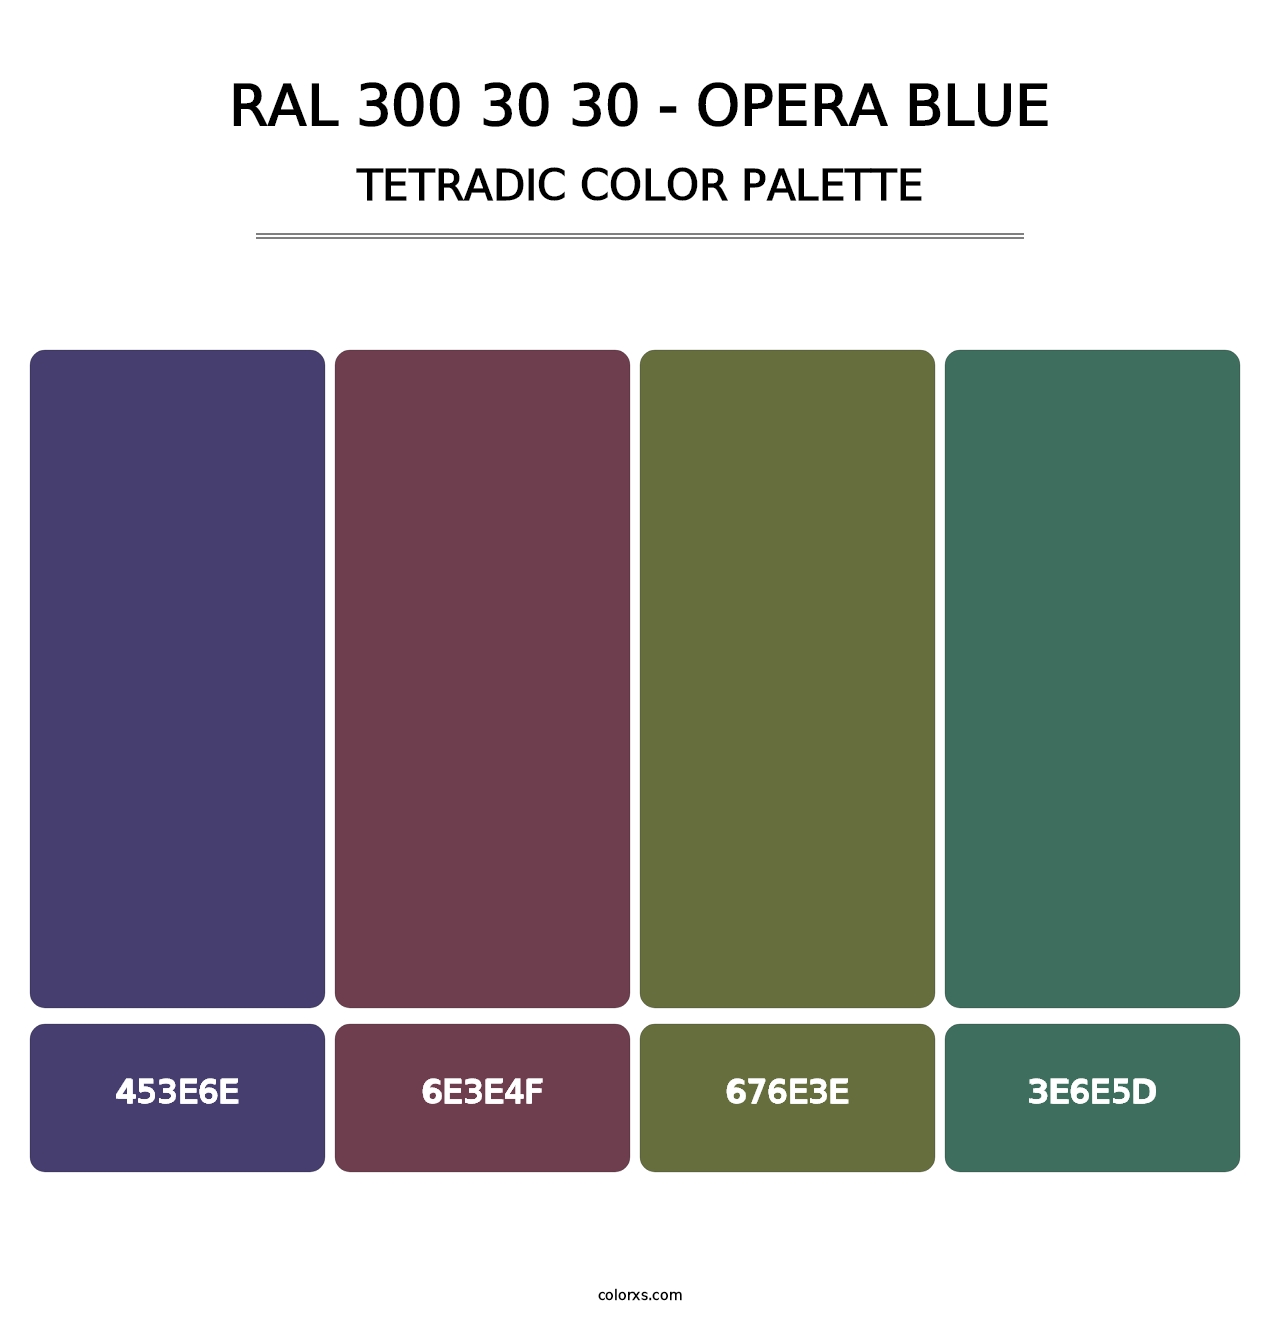 RAL 300 30 30 - Opera Blue - Tetradic Color Palette